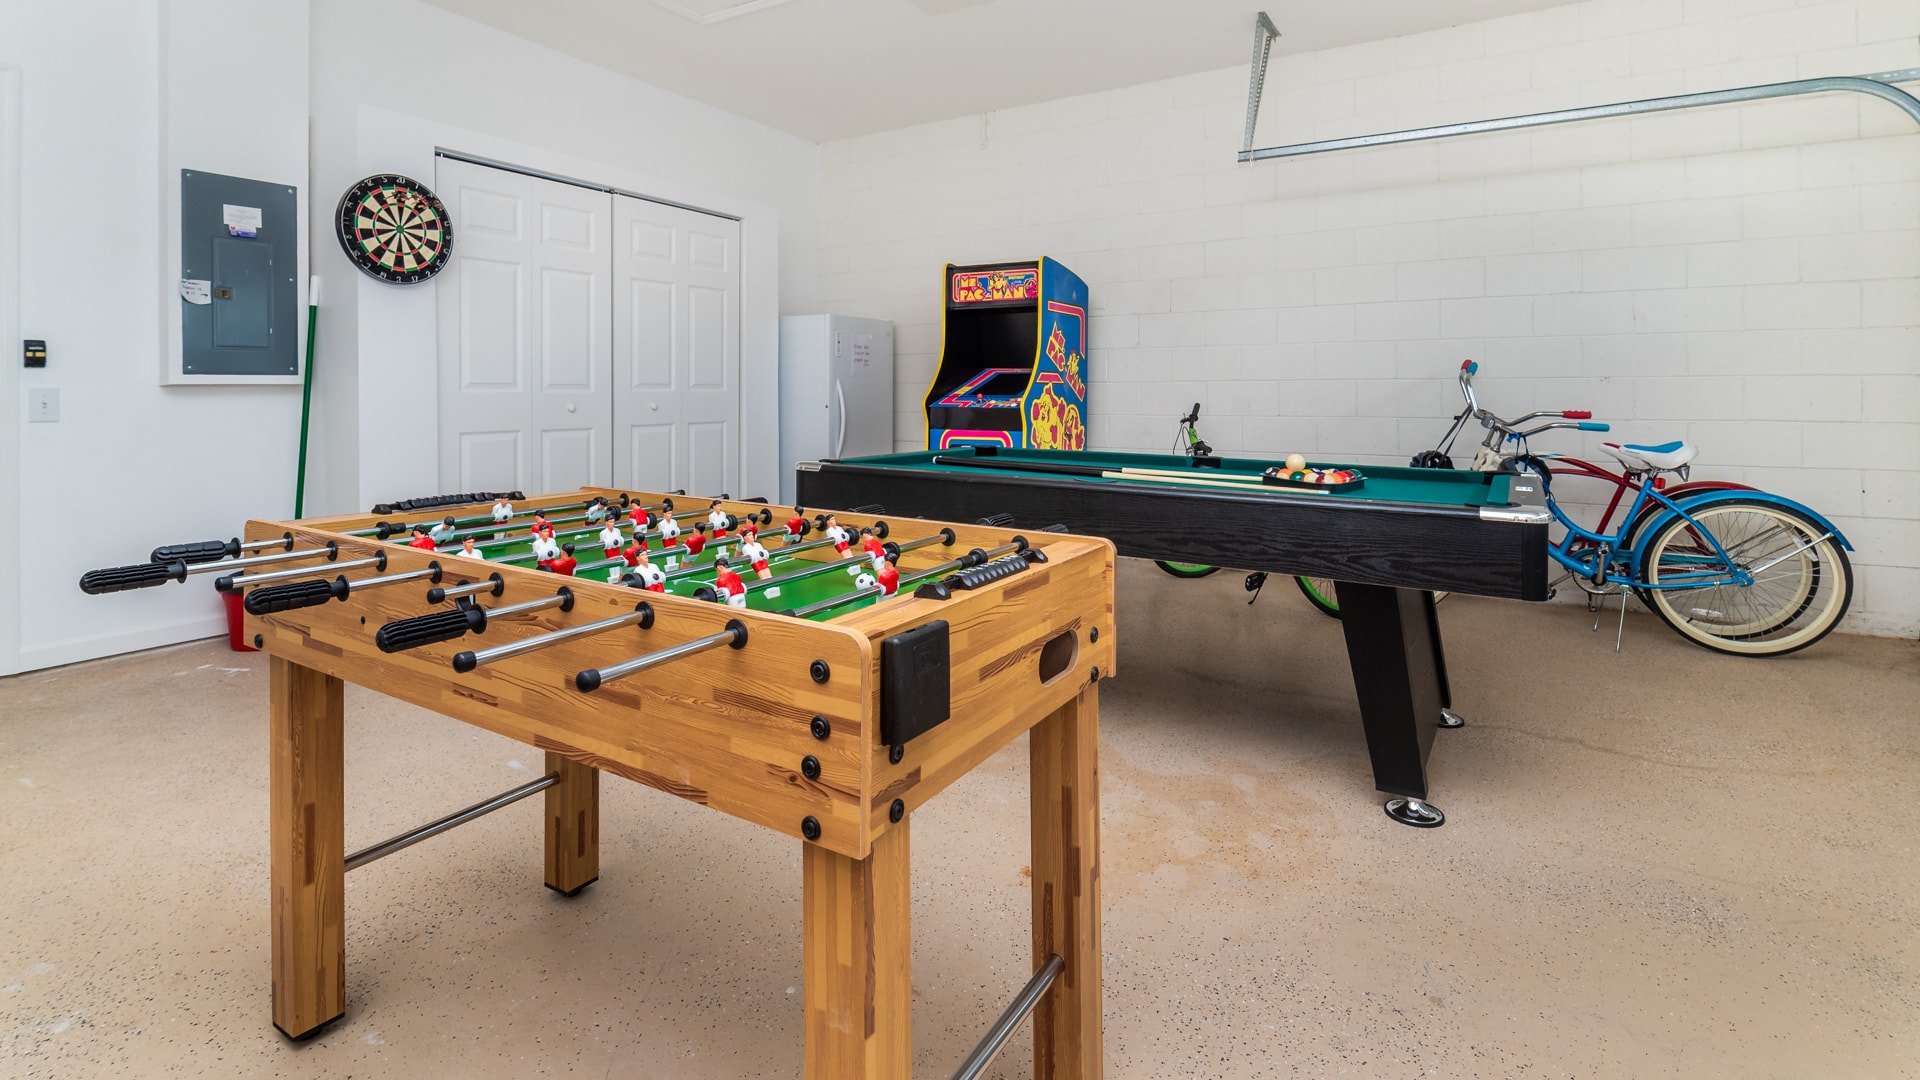 Game Room (Angle)
Pool Table 
Foosball
Video Arcade
42